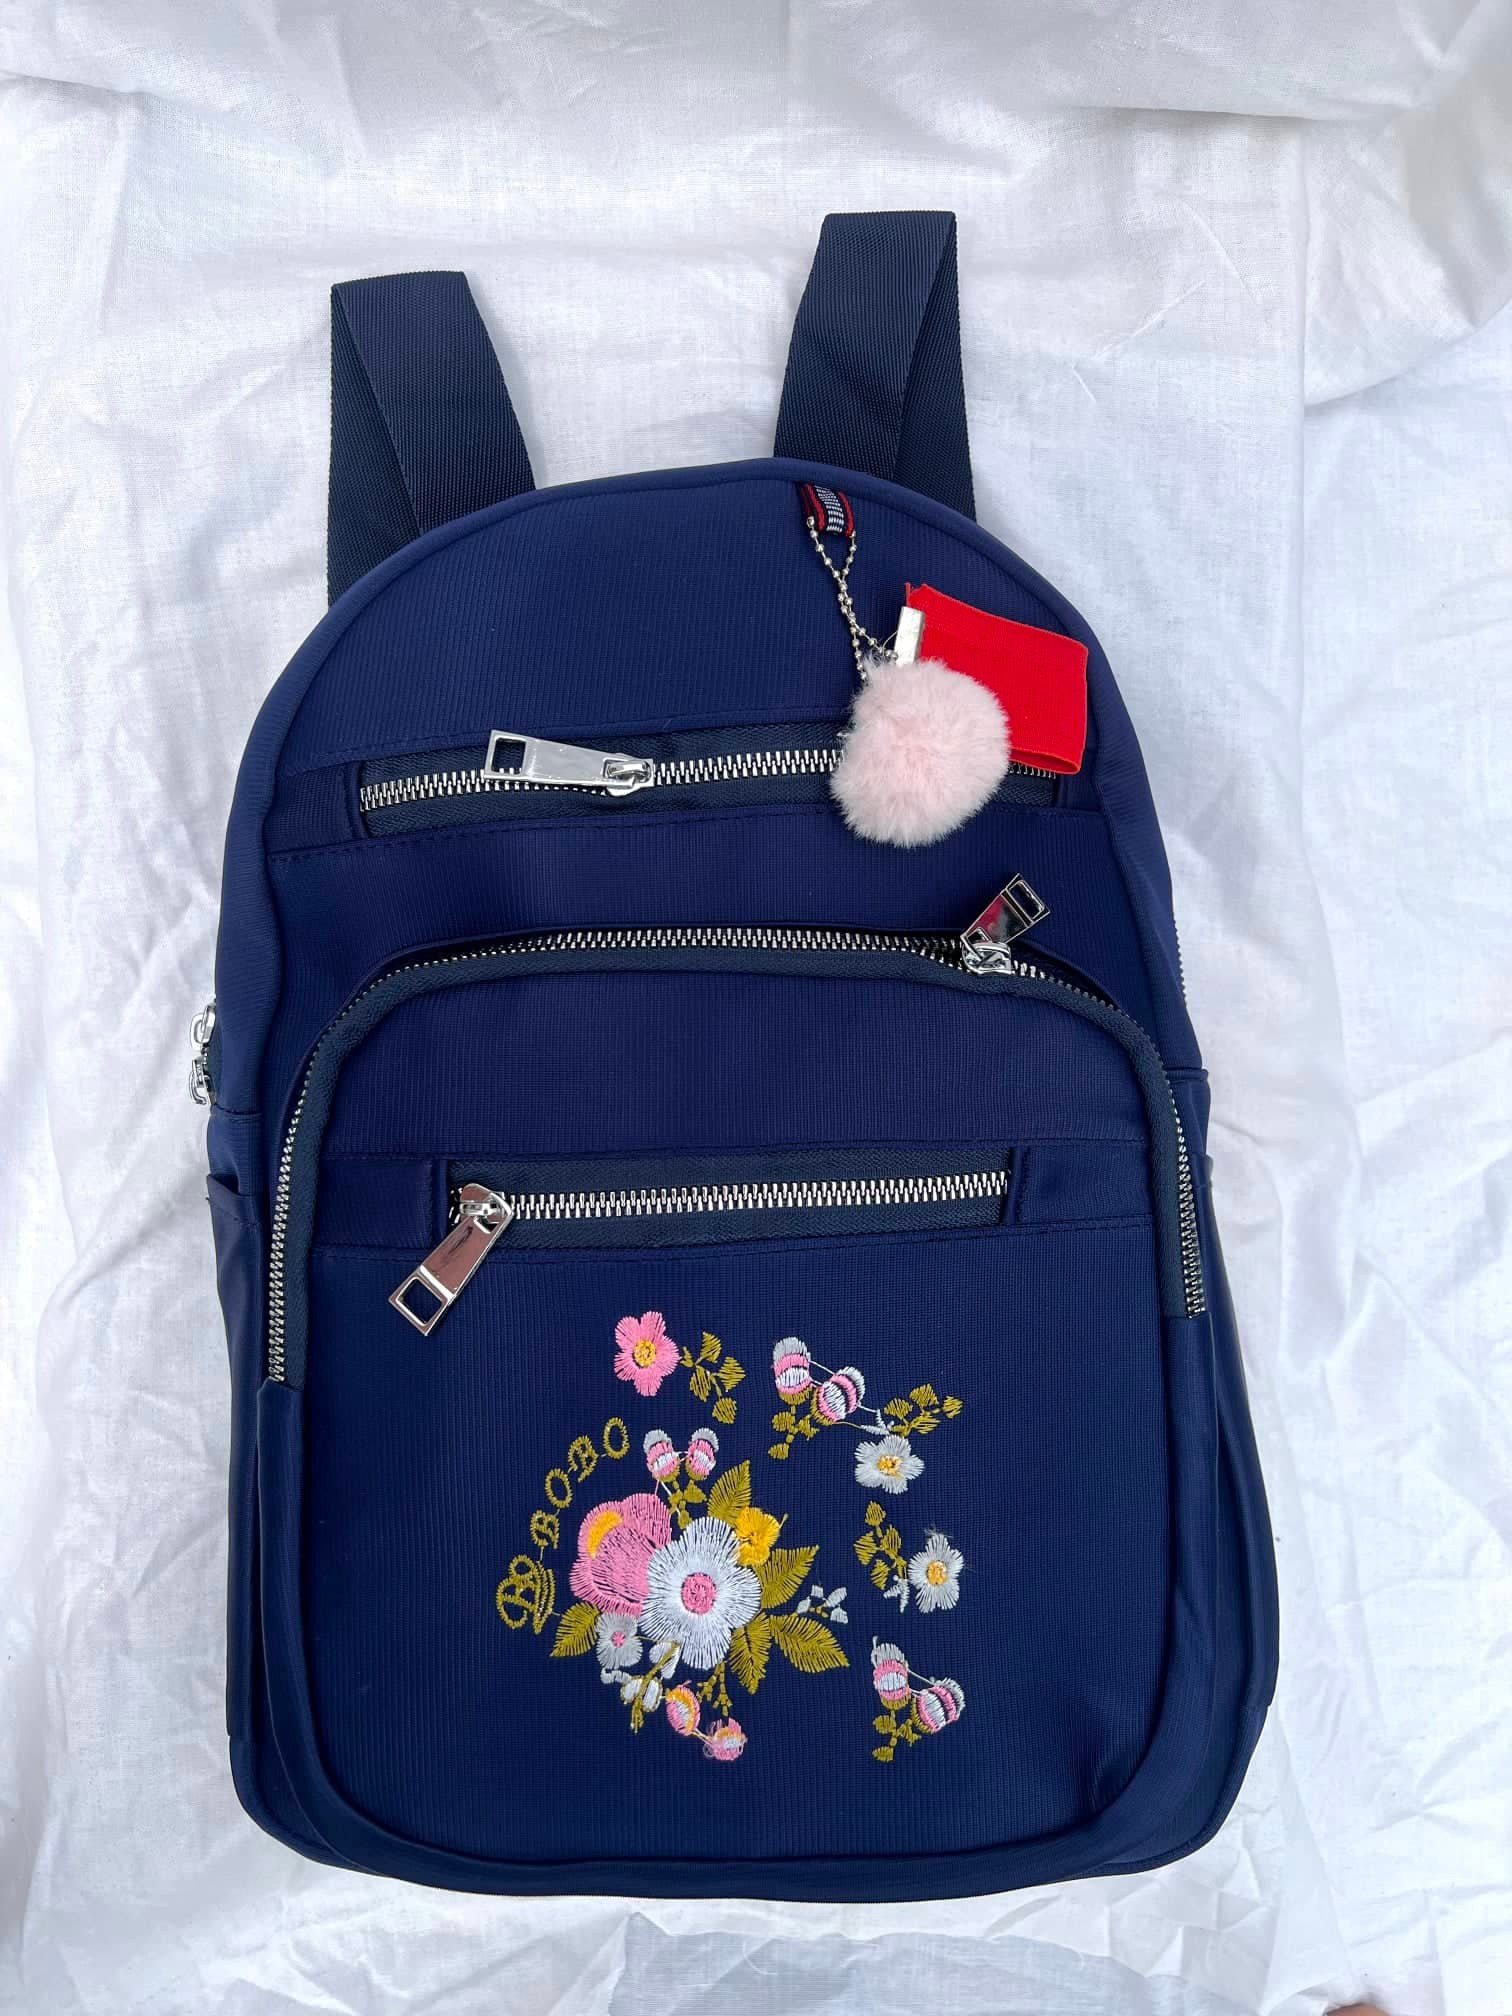 School bag for girls | new school bag design